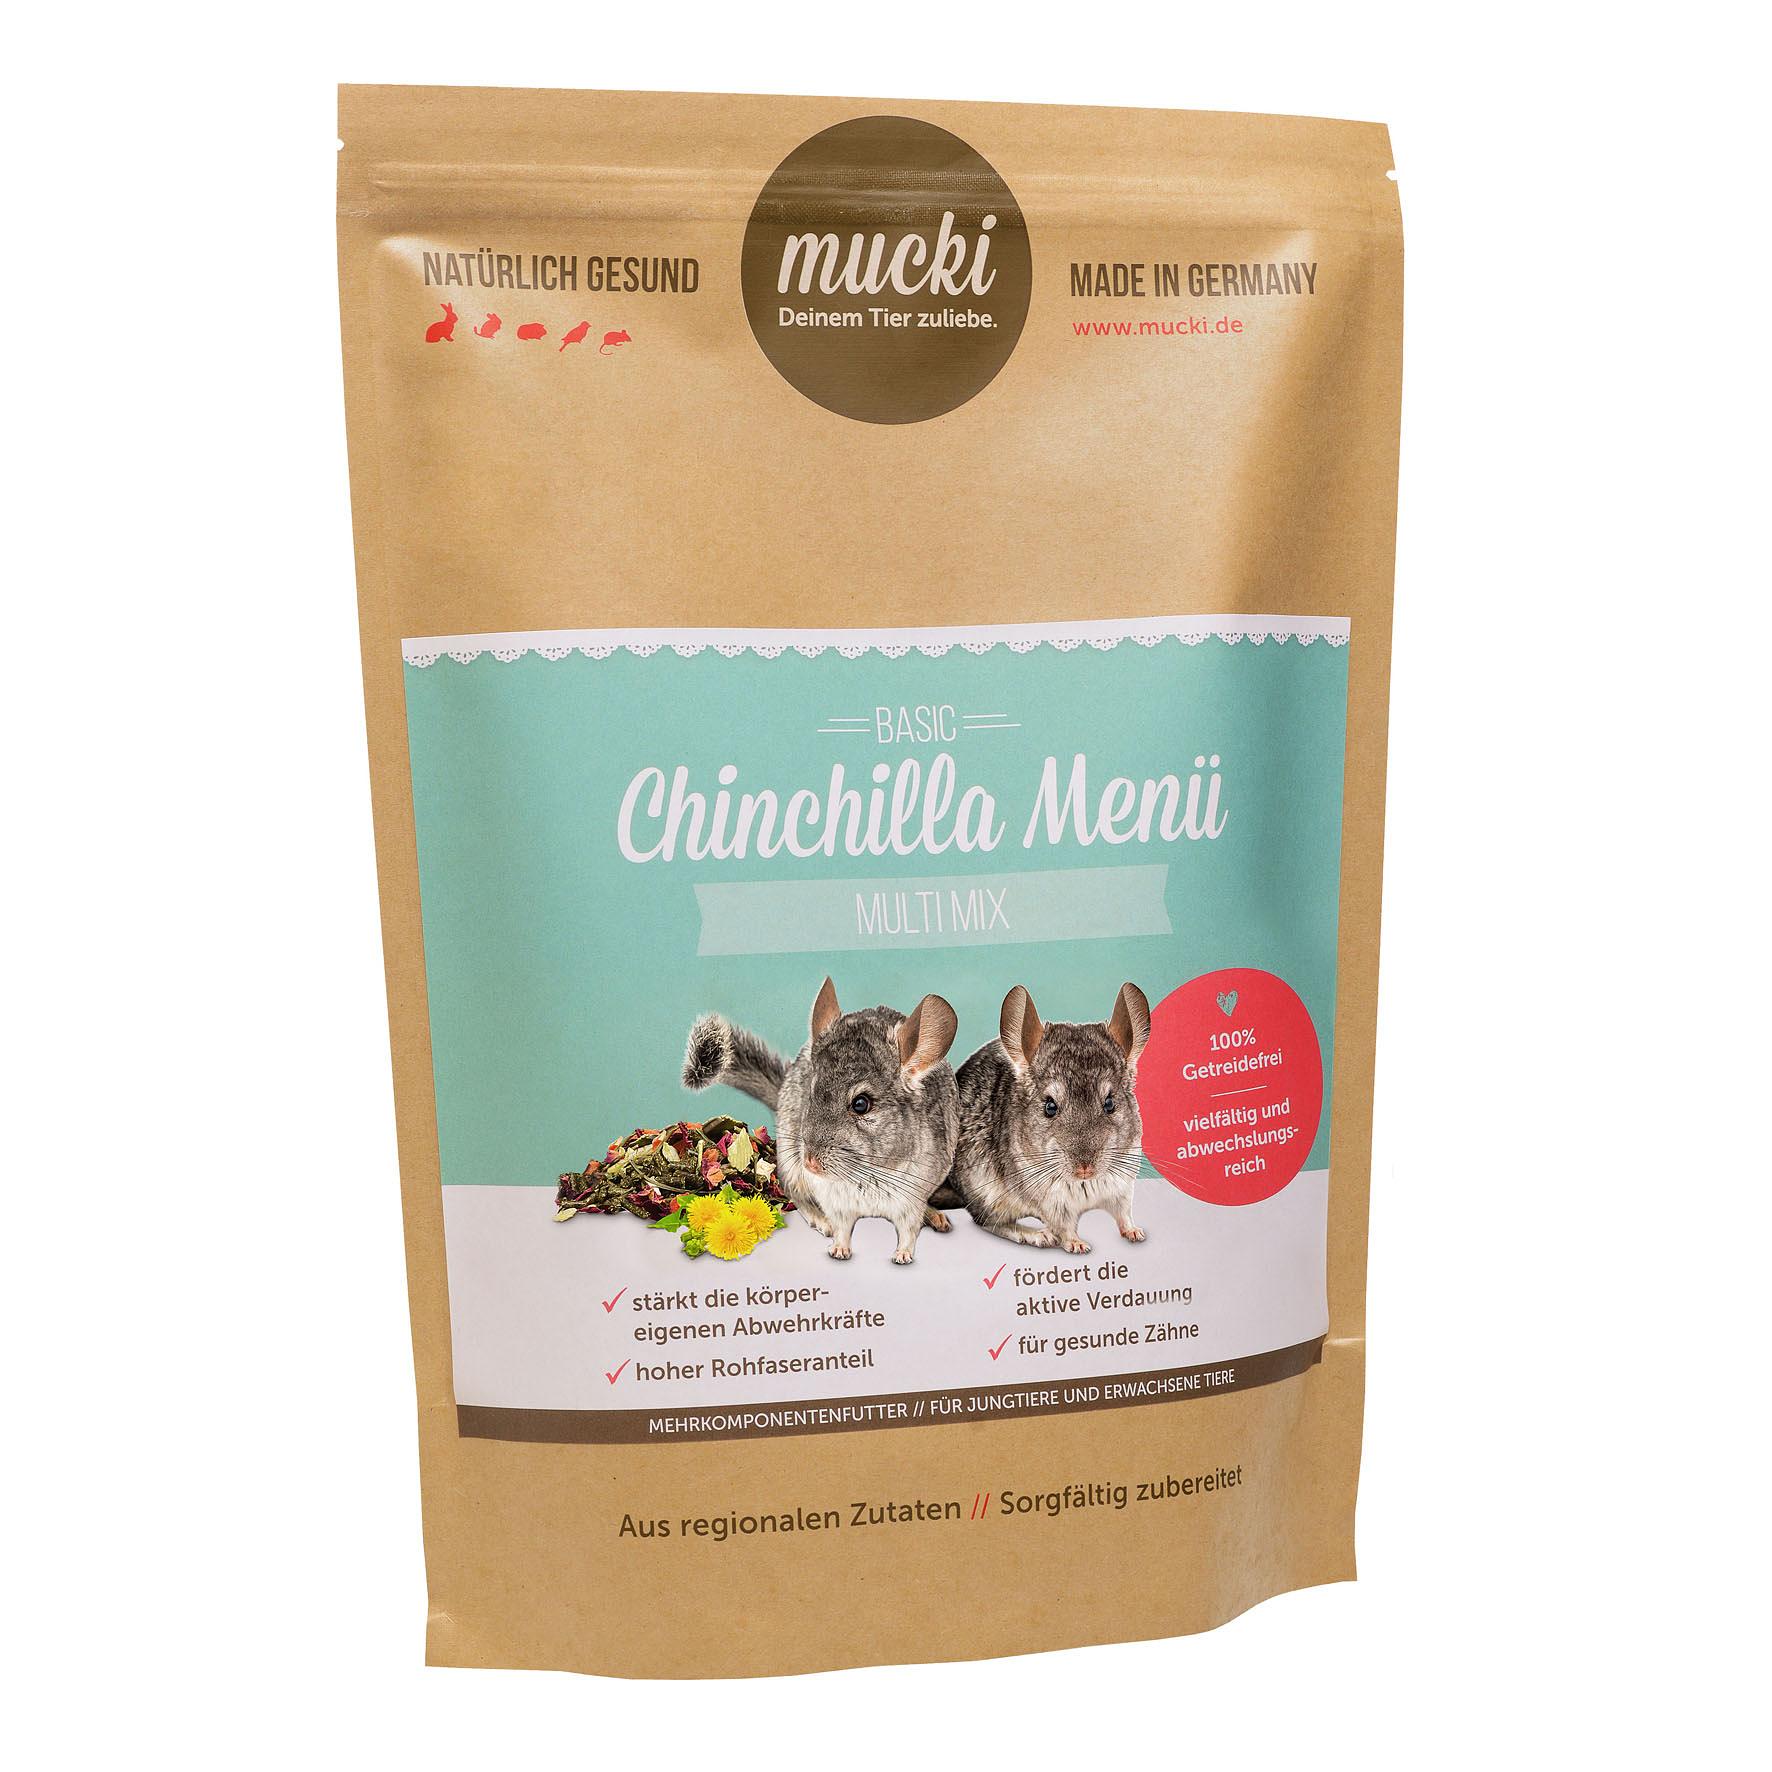 Mucki Menu pour chinchillas Multi Mix